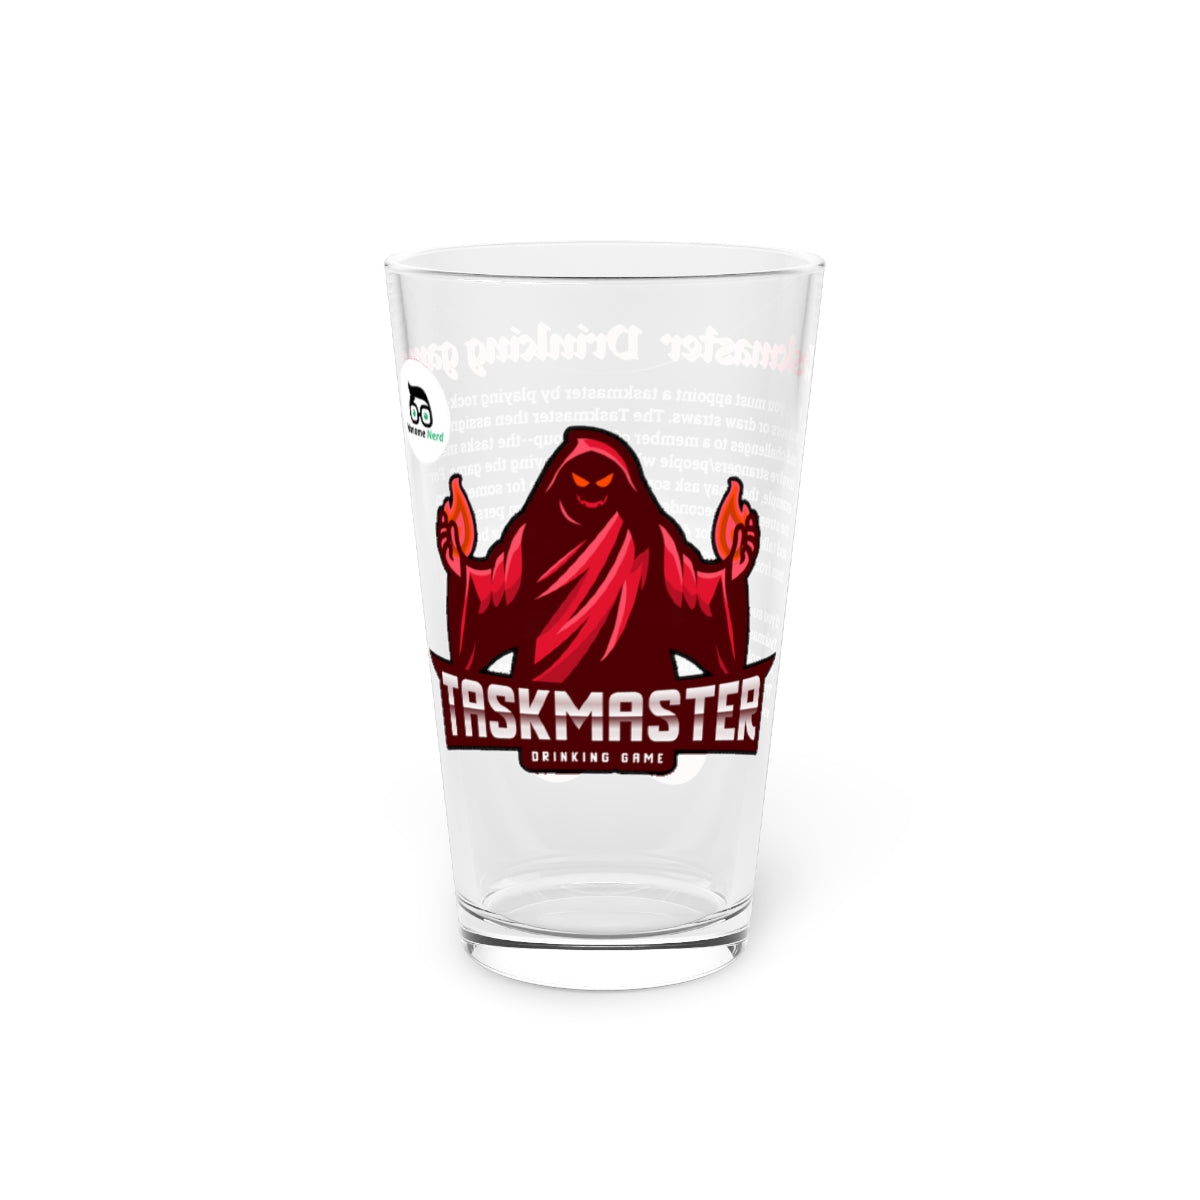 Taskmaster Drinking Game Pint Glass